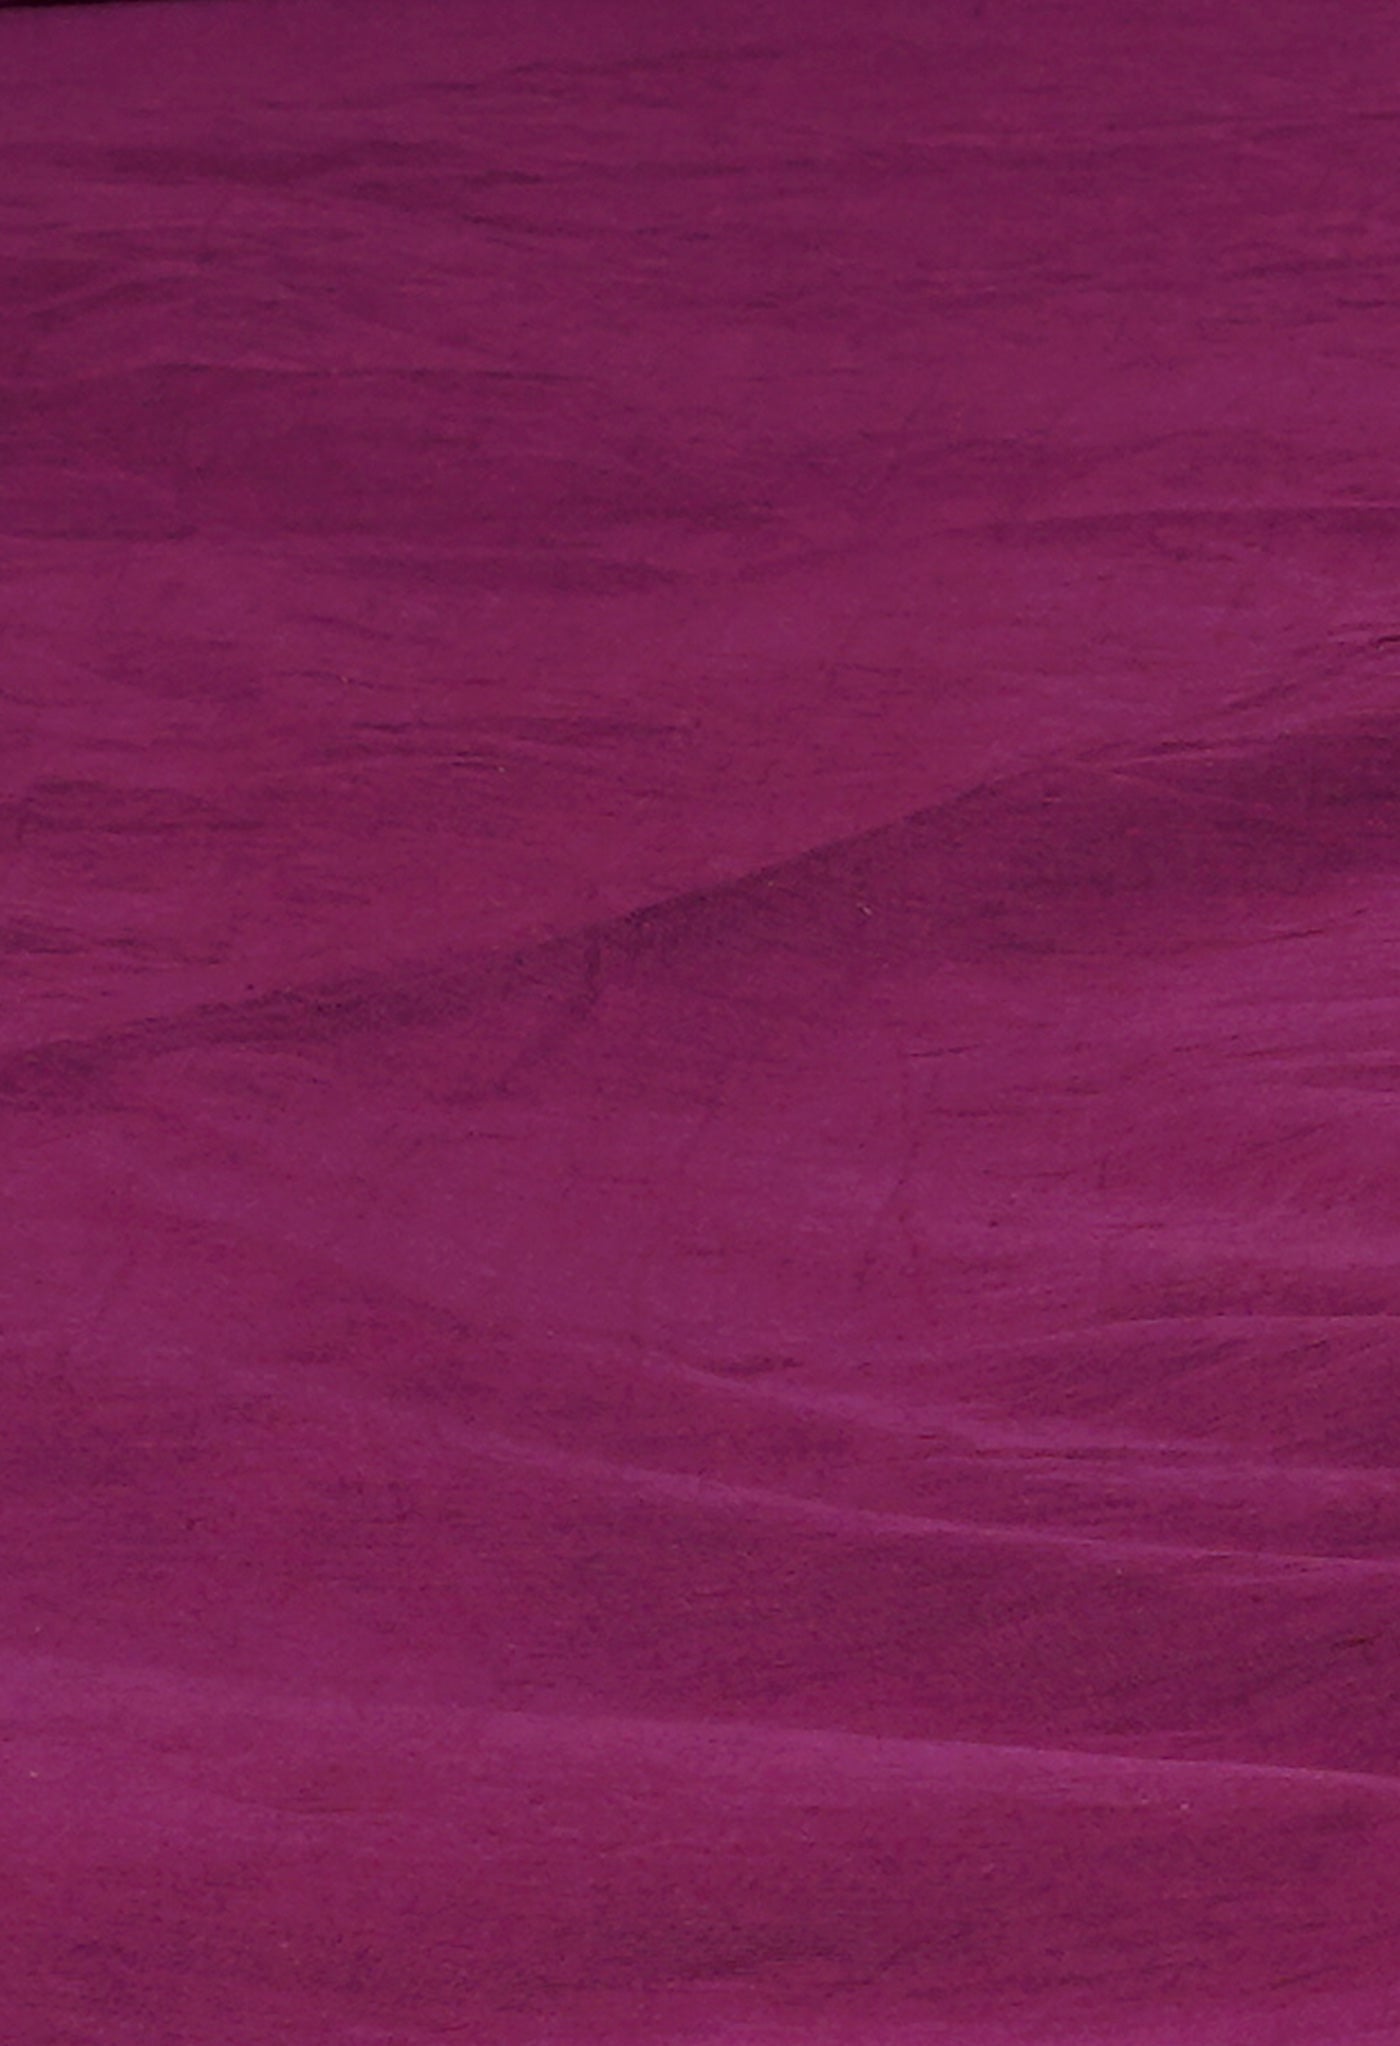 Purple Art Chanderi Bagh Printed Cotton Saree